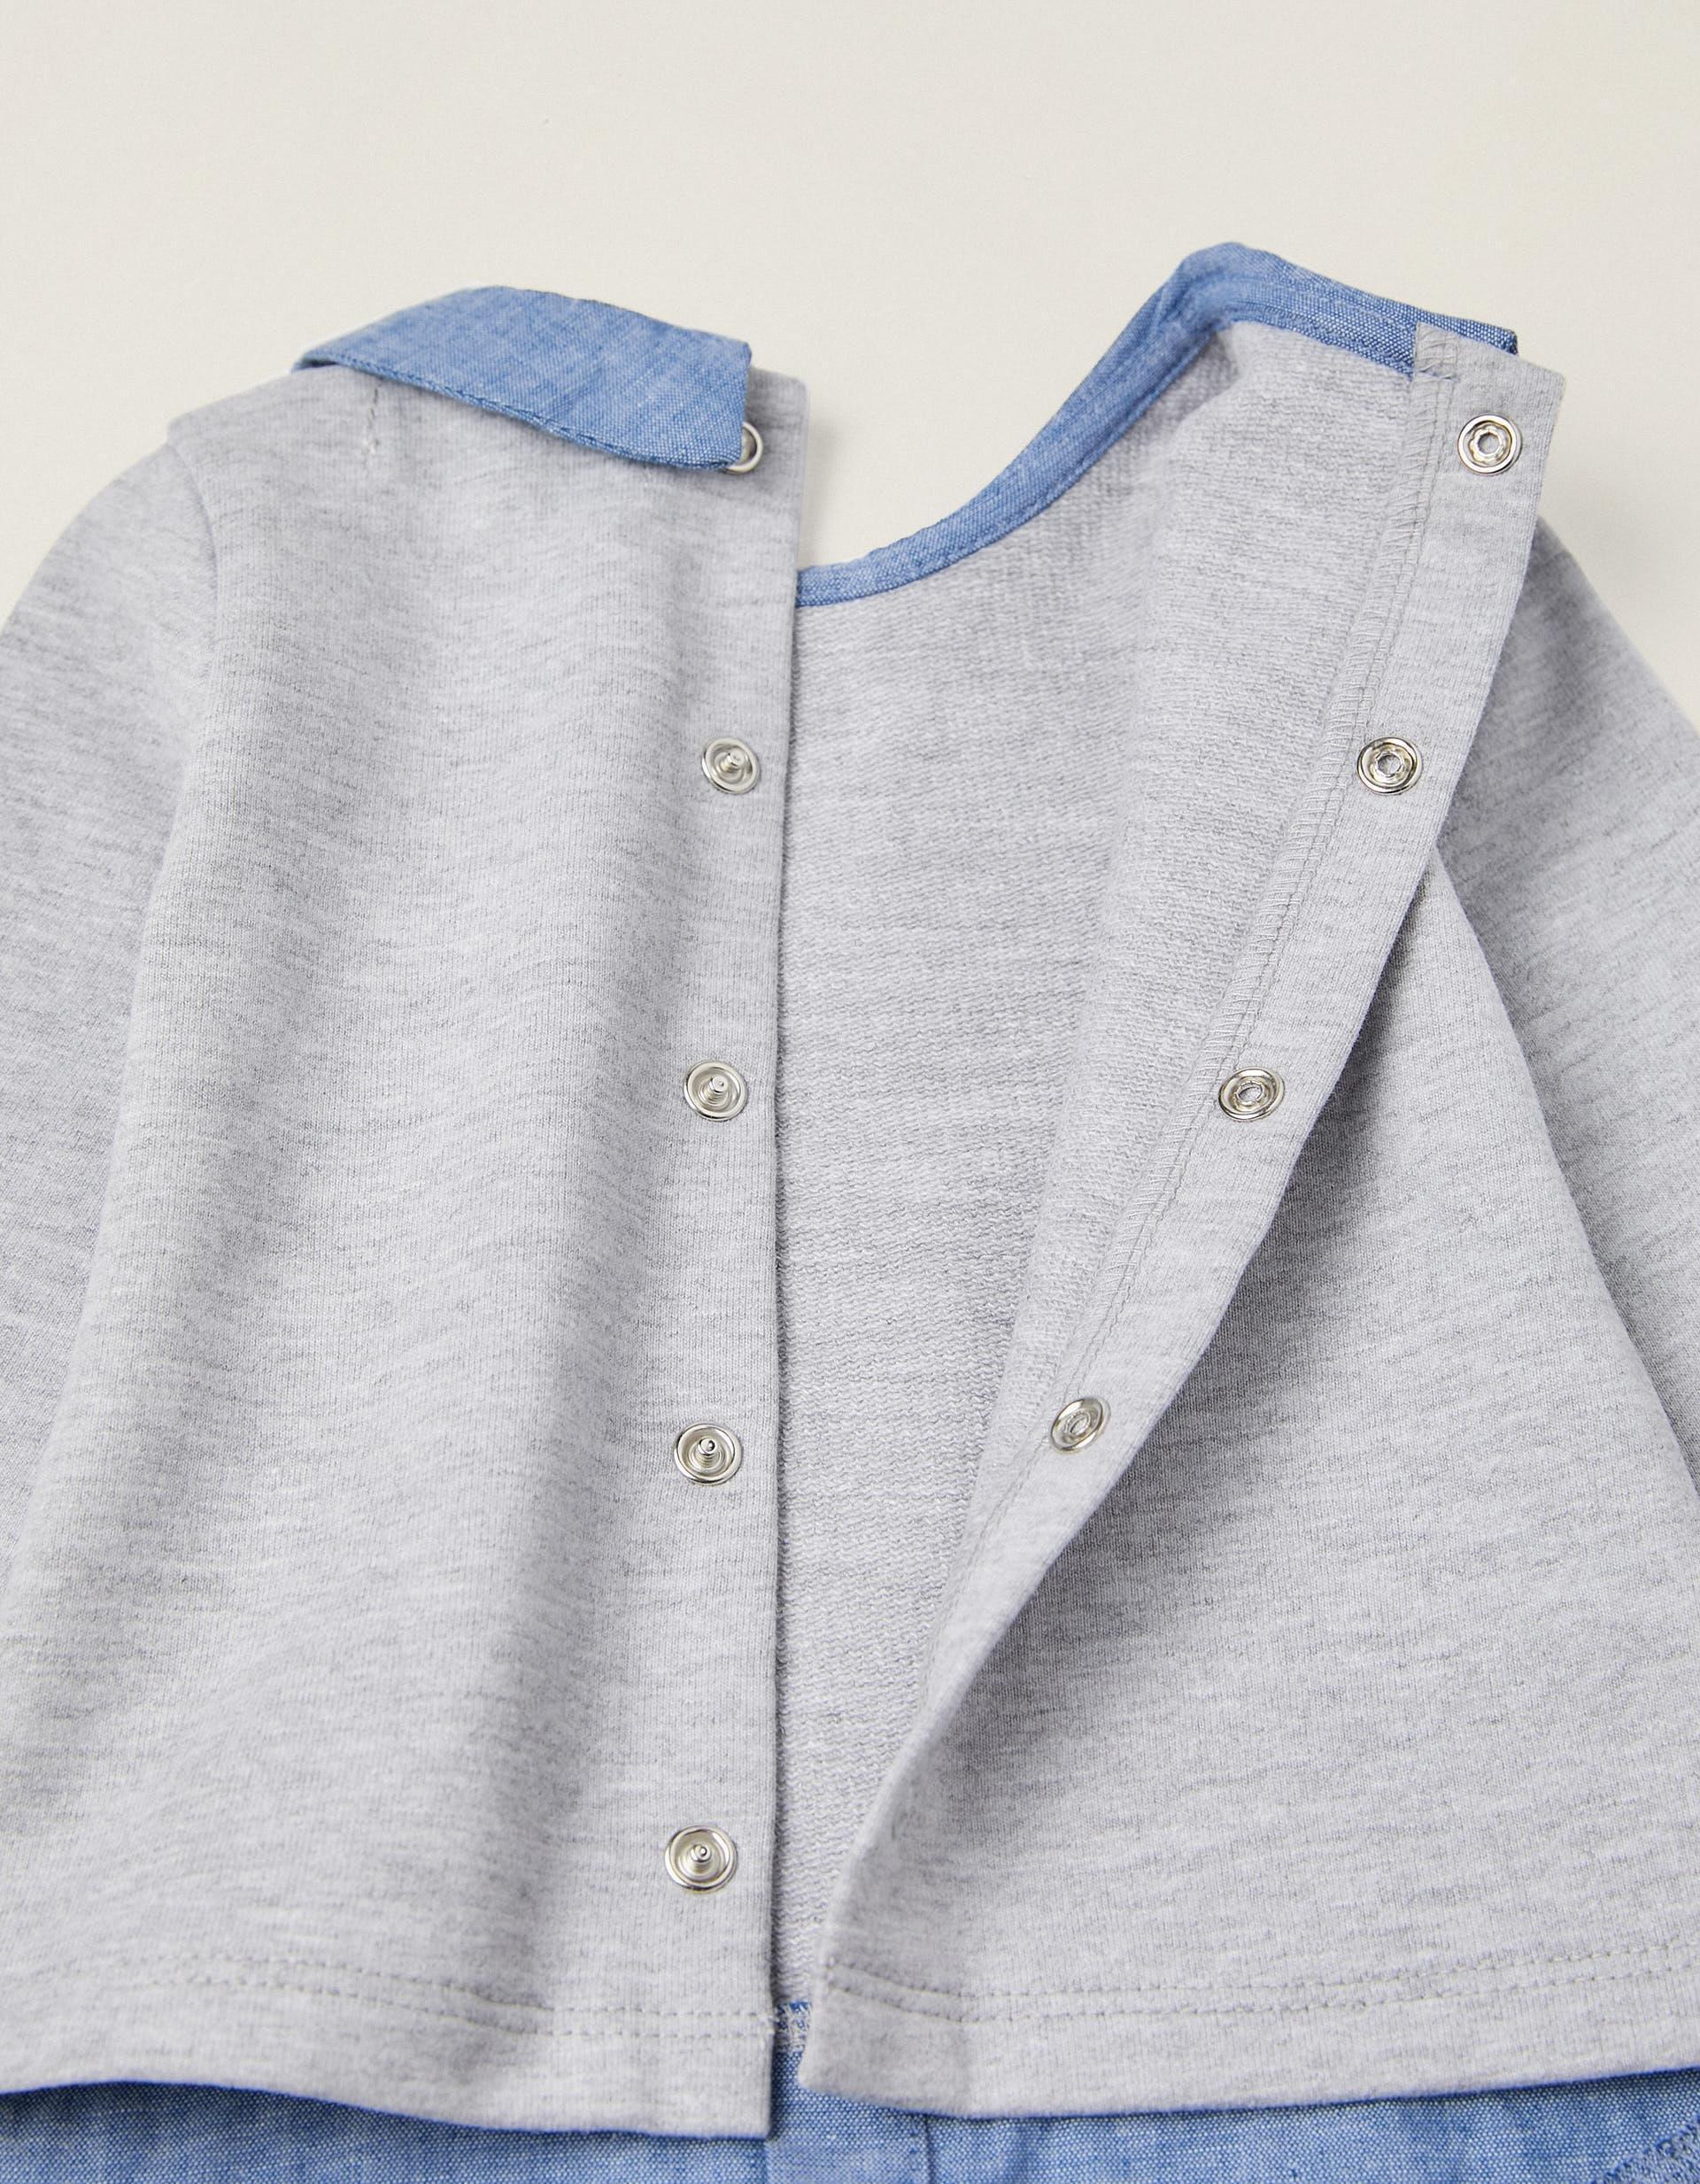 Zippy - Grey Cotton 2 In 1 Sweatshirt, Baby Unisex